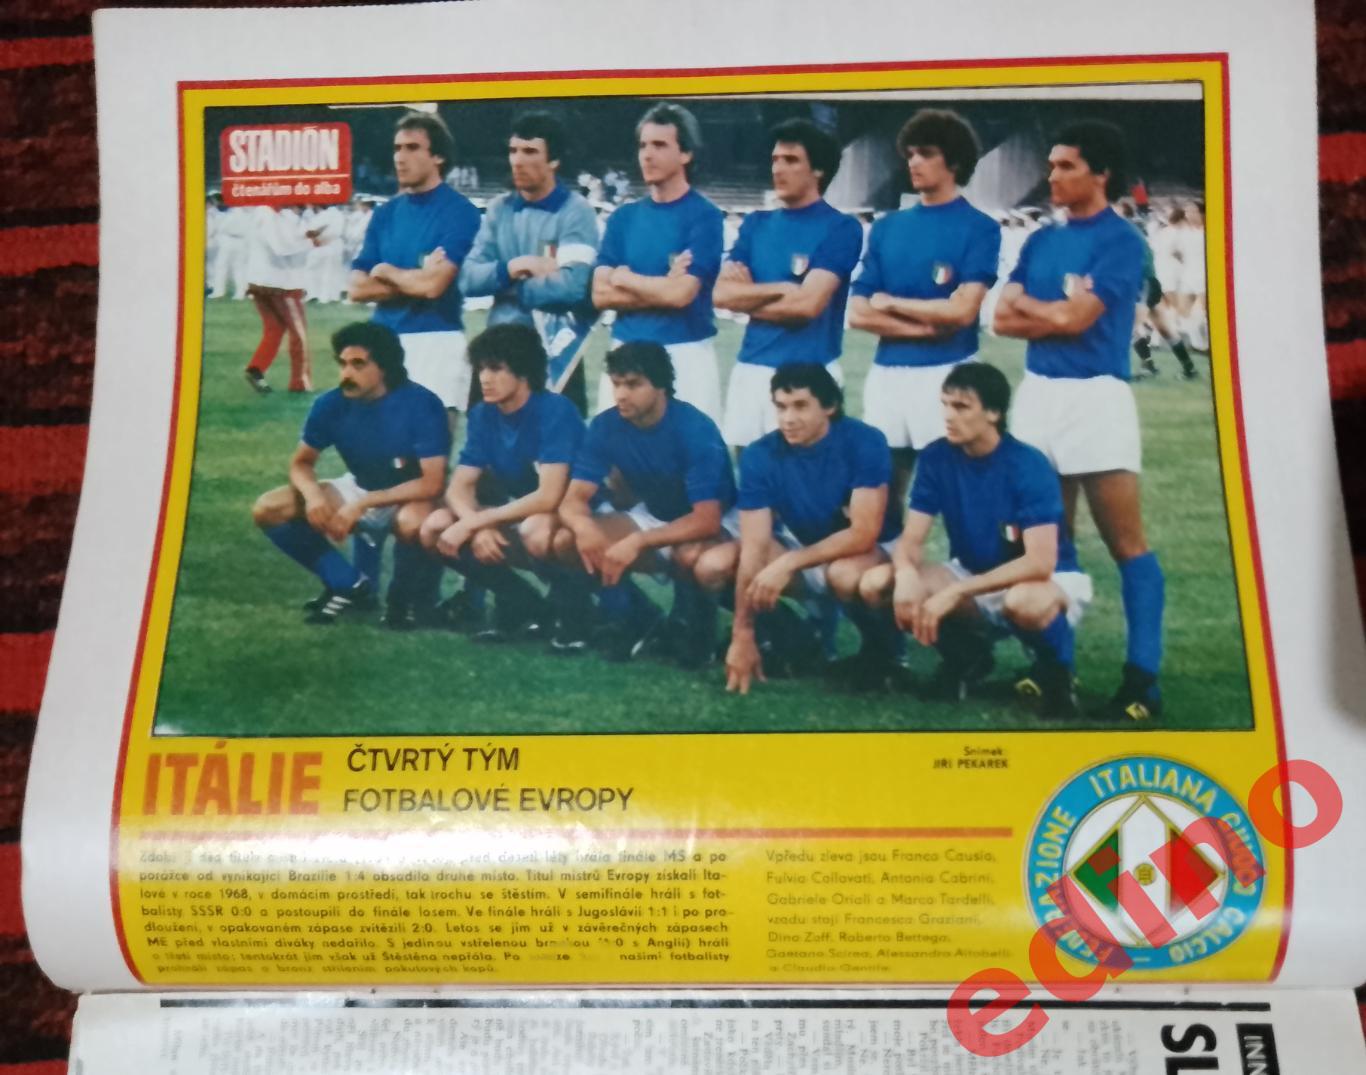 журнал Стадион(stadion) 1980 год Италия полуфиналист Евро 80